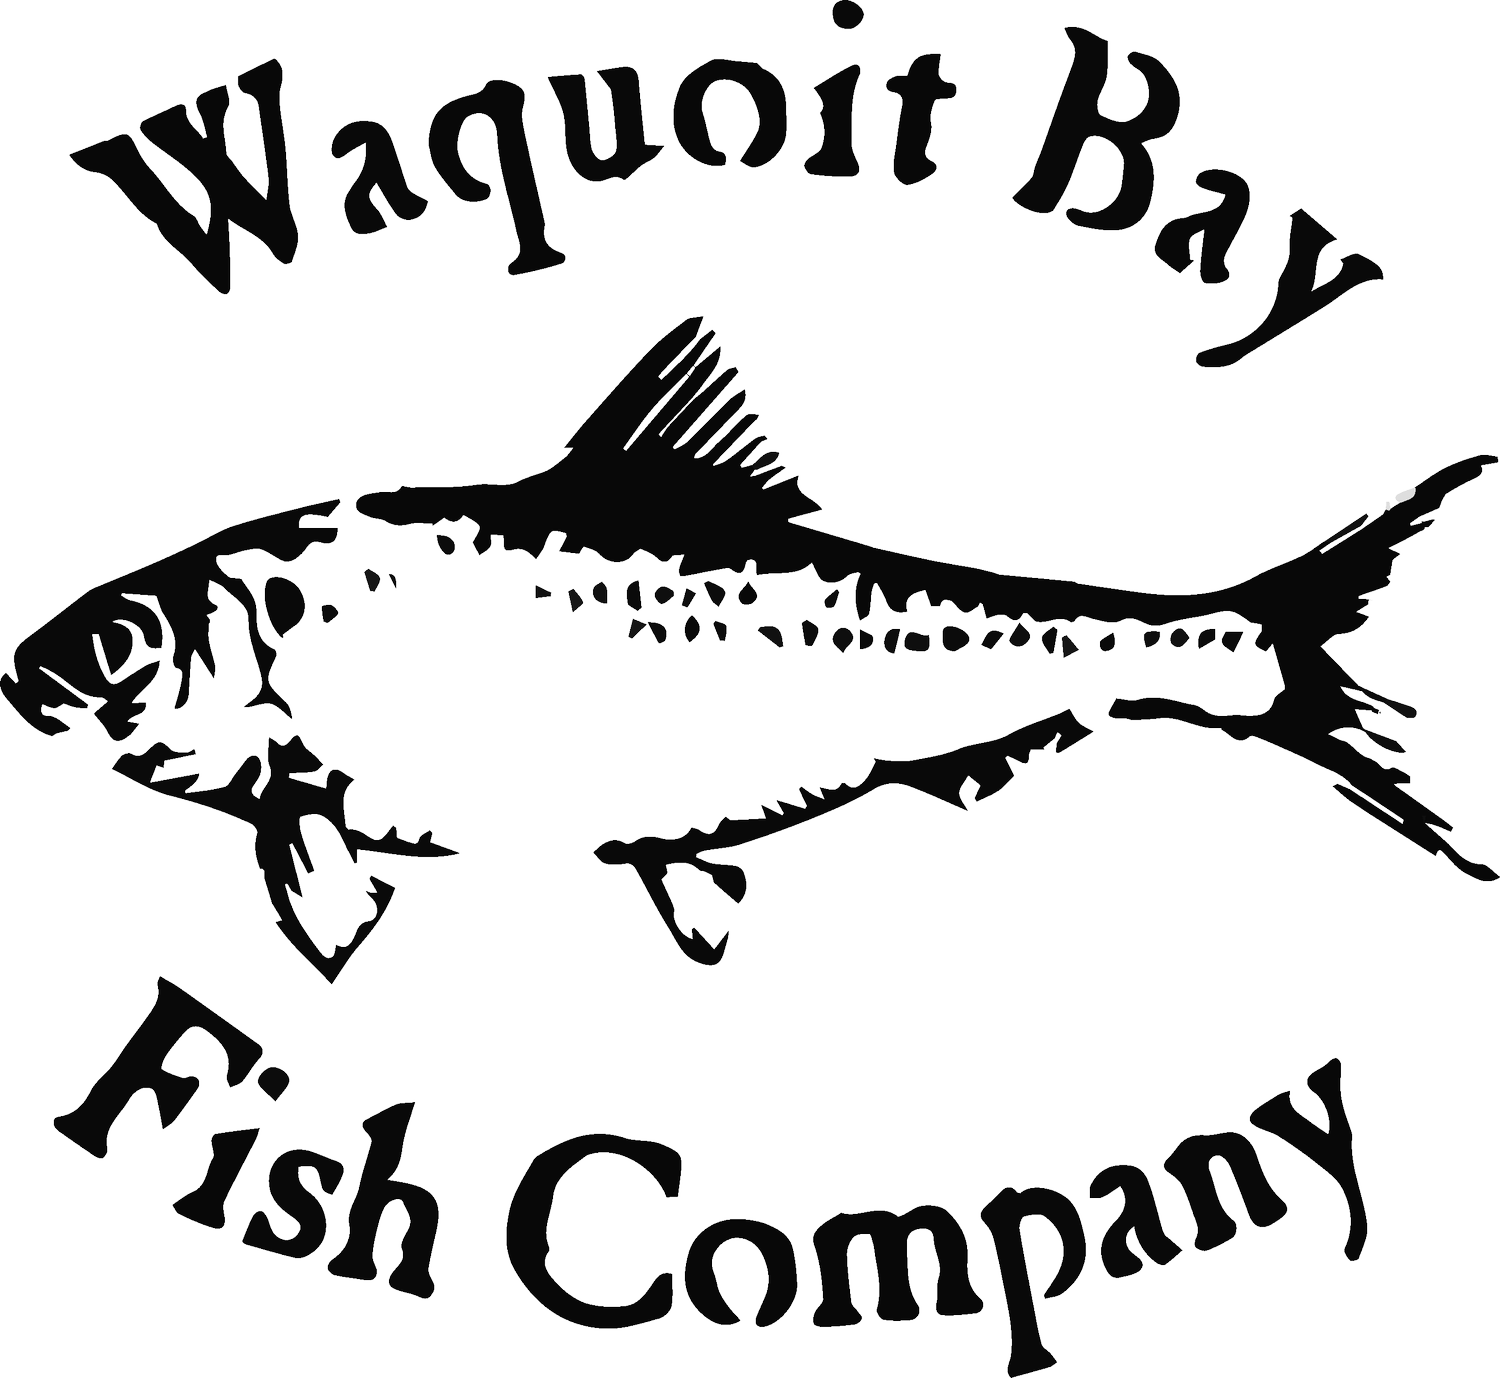 Waquoit Bay Fish Company